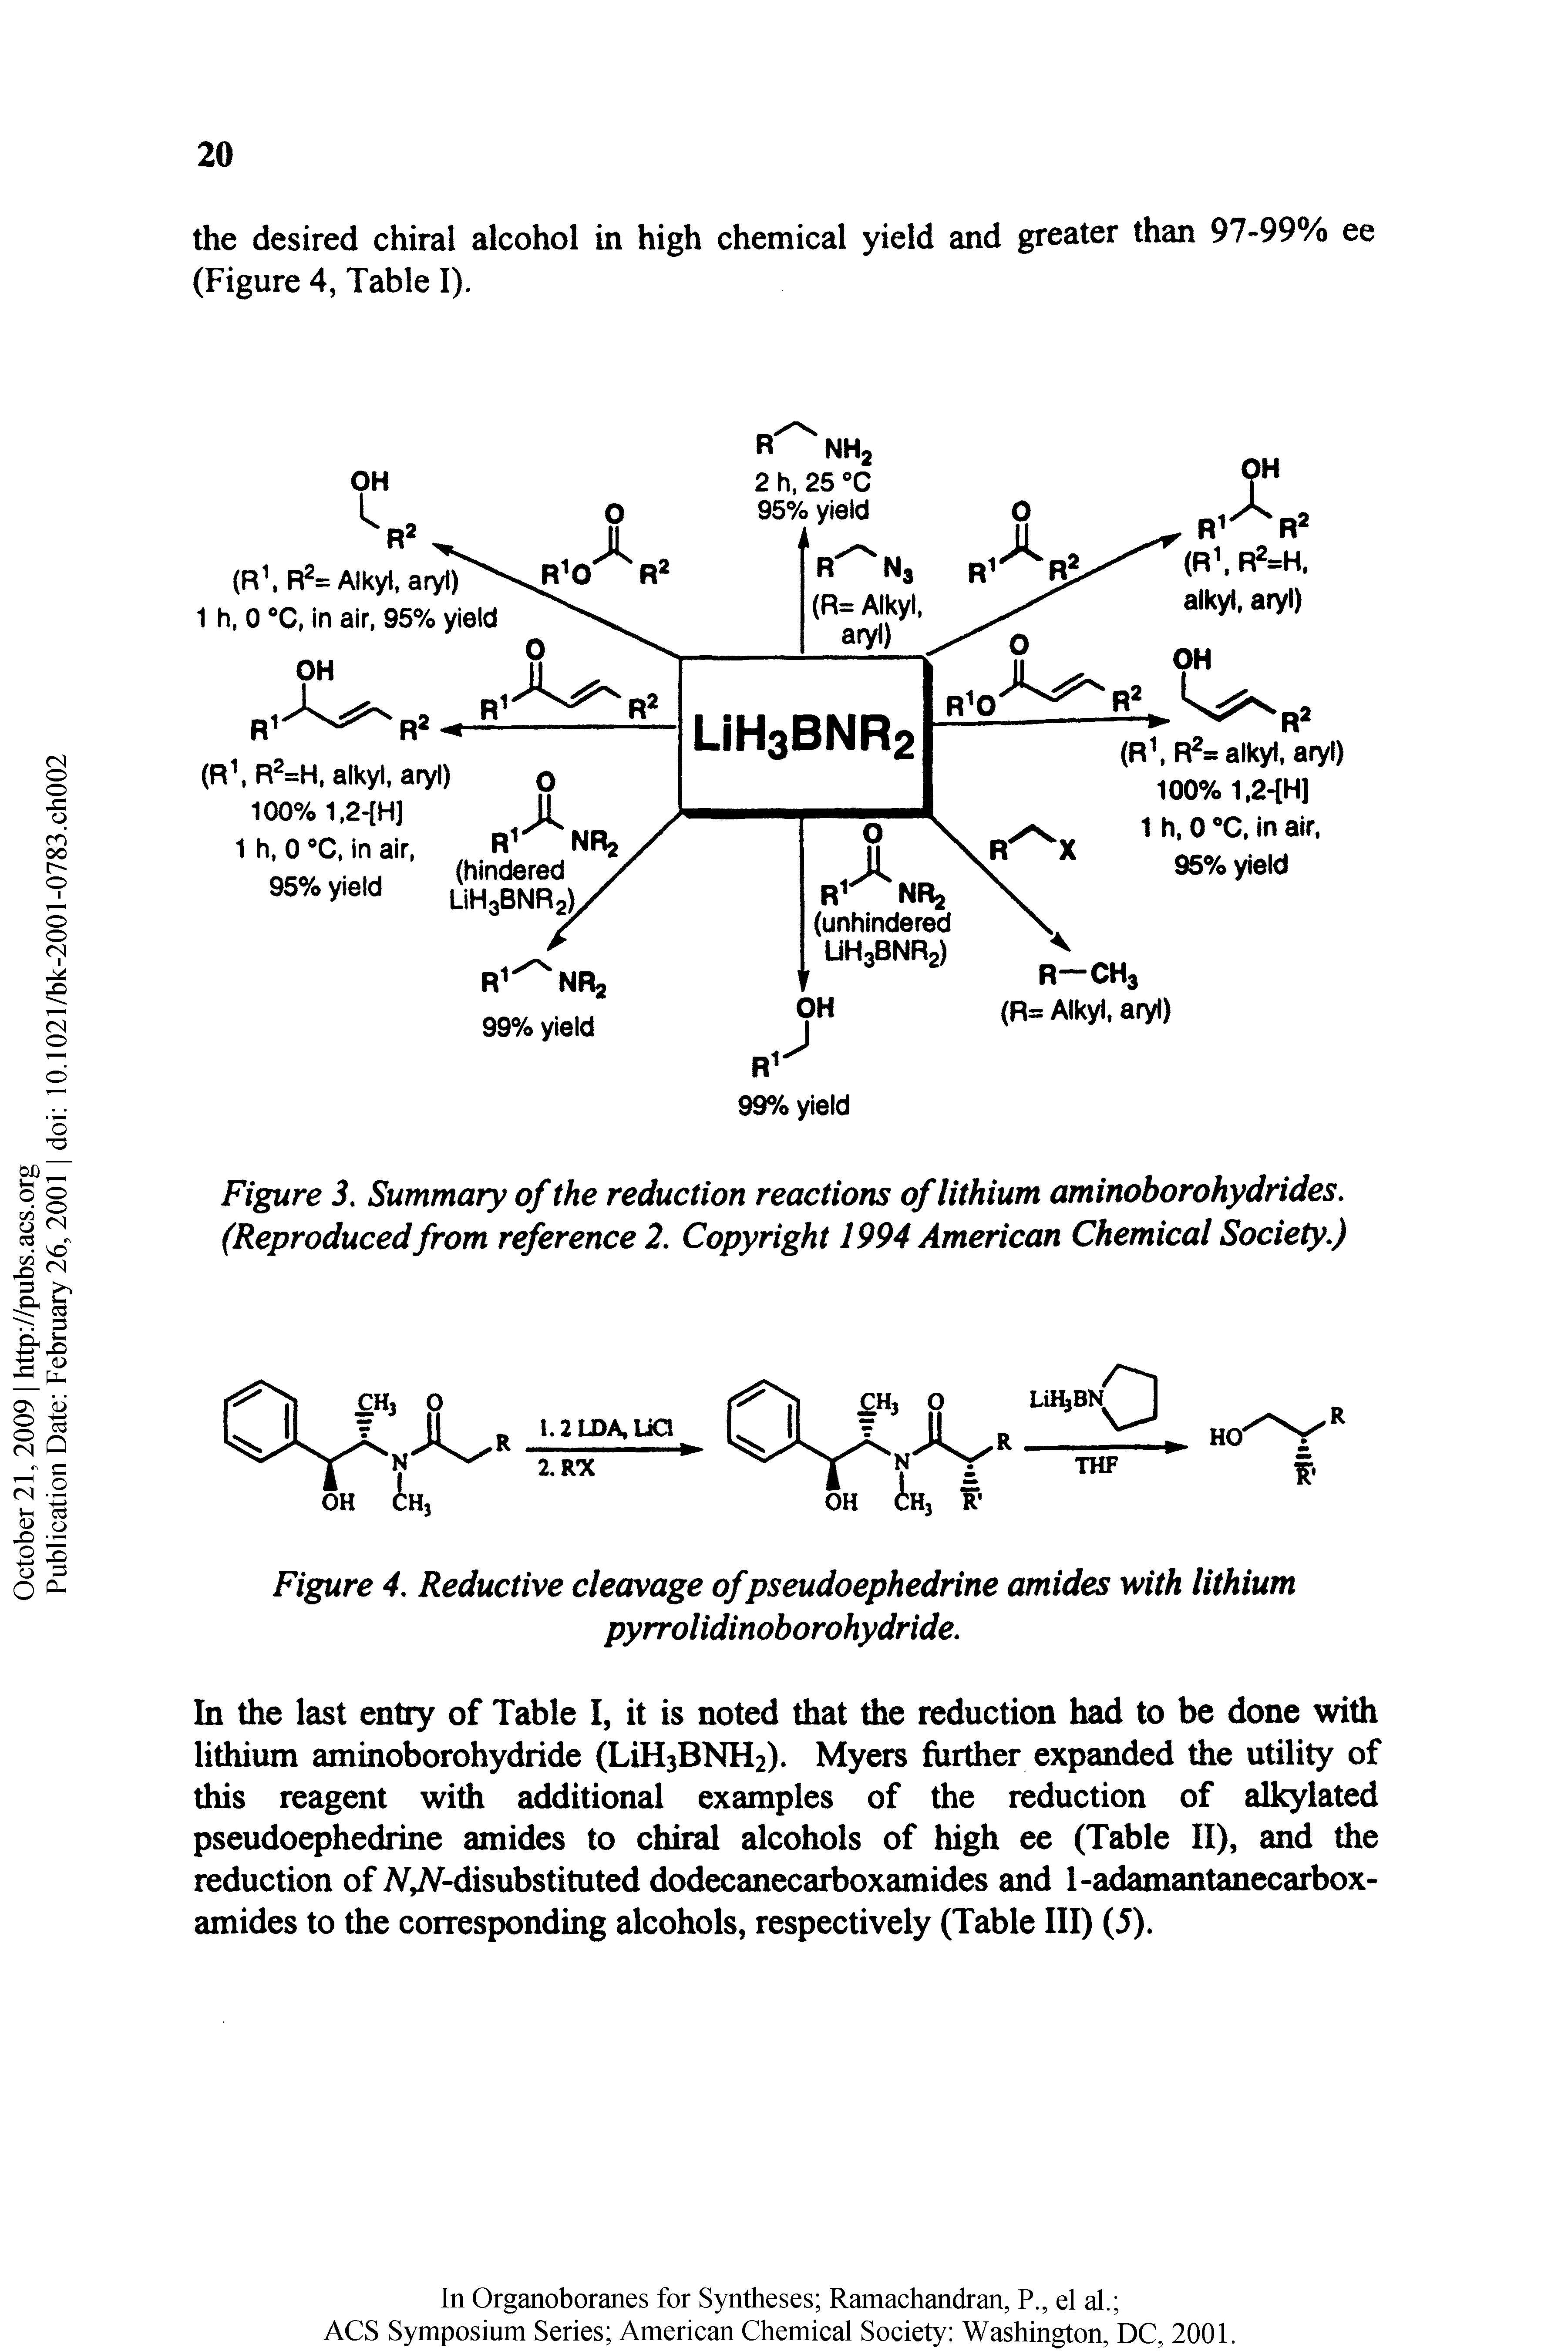 Figure 4, Reductive cleavage of pseudoephedrine amides with lithium pyrrolidinoborohydride.